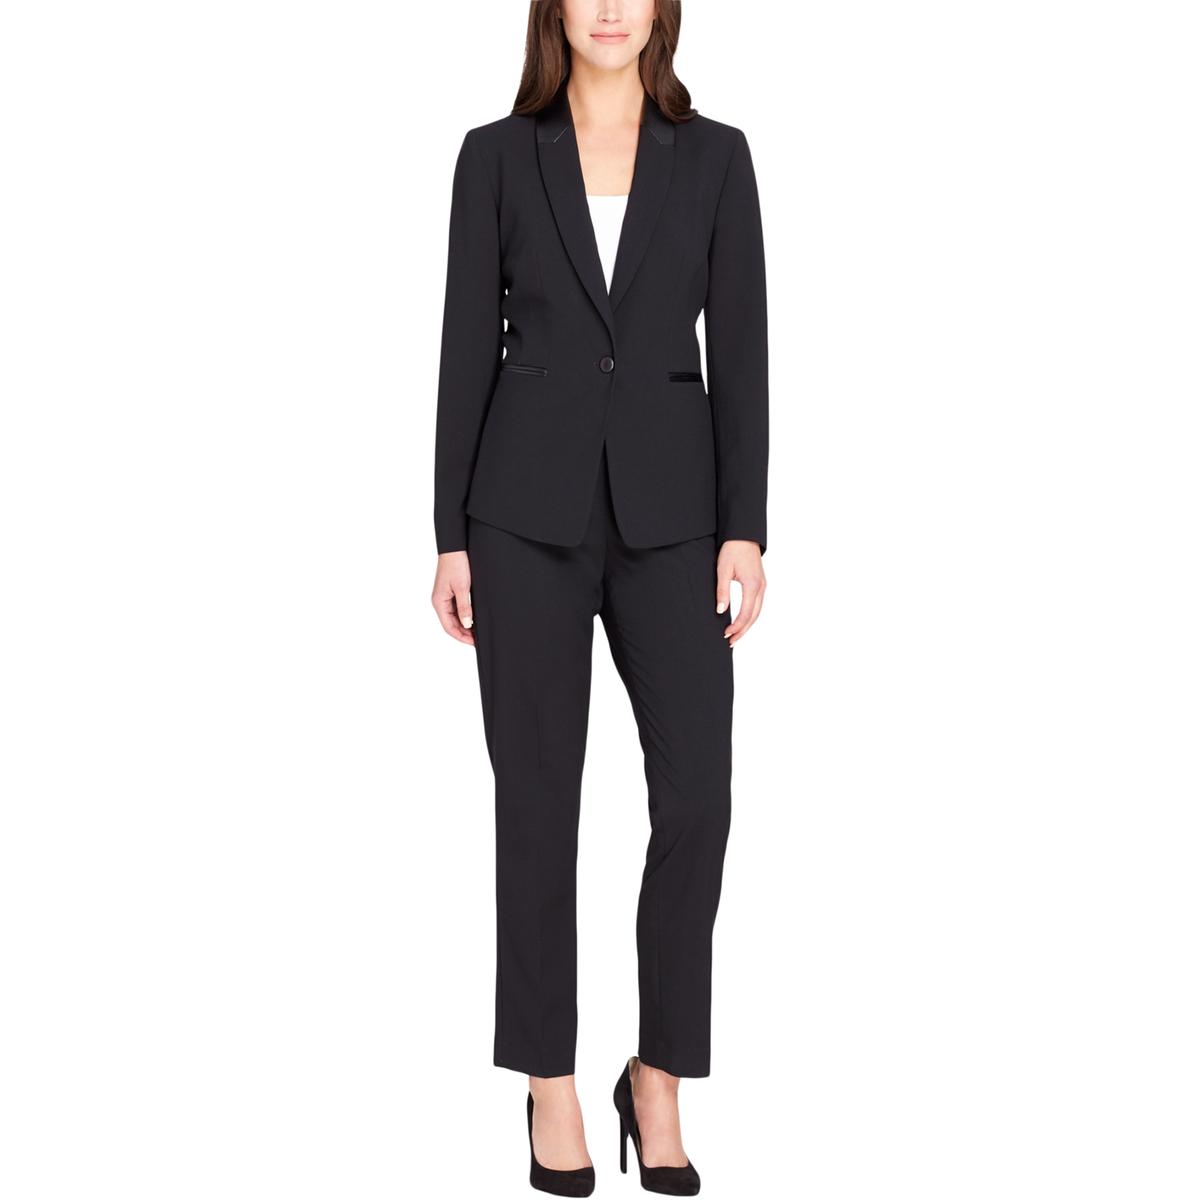 Size 14 Women's Suits & Sets - Sears